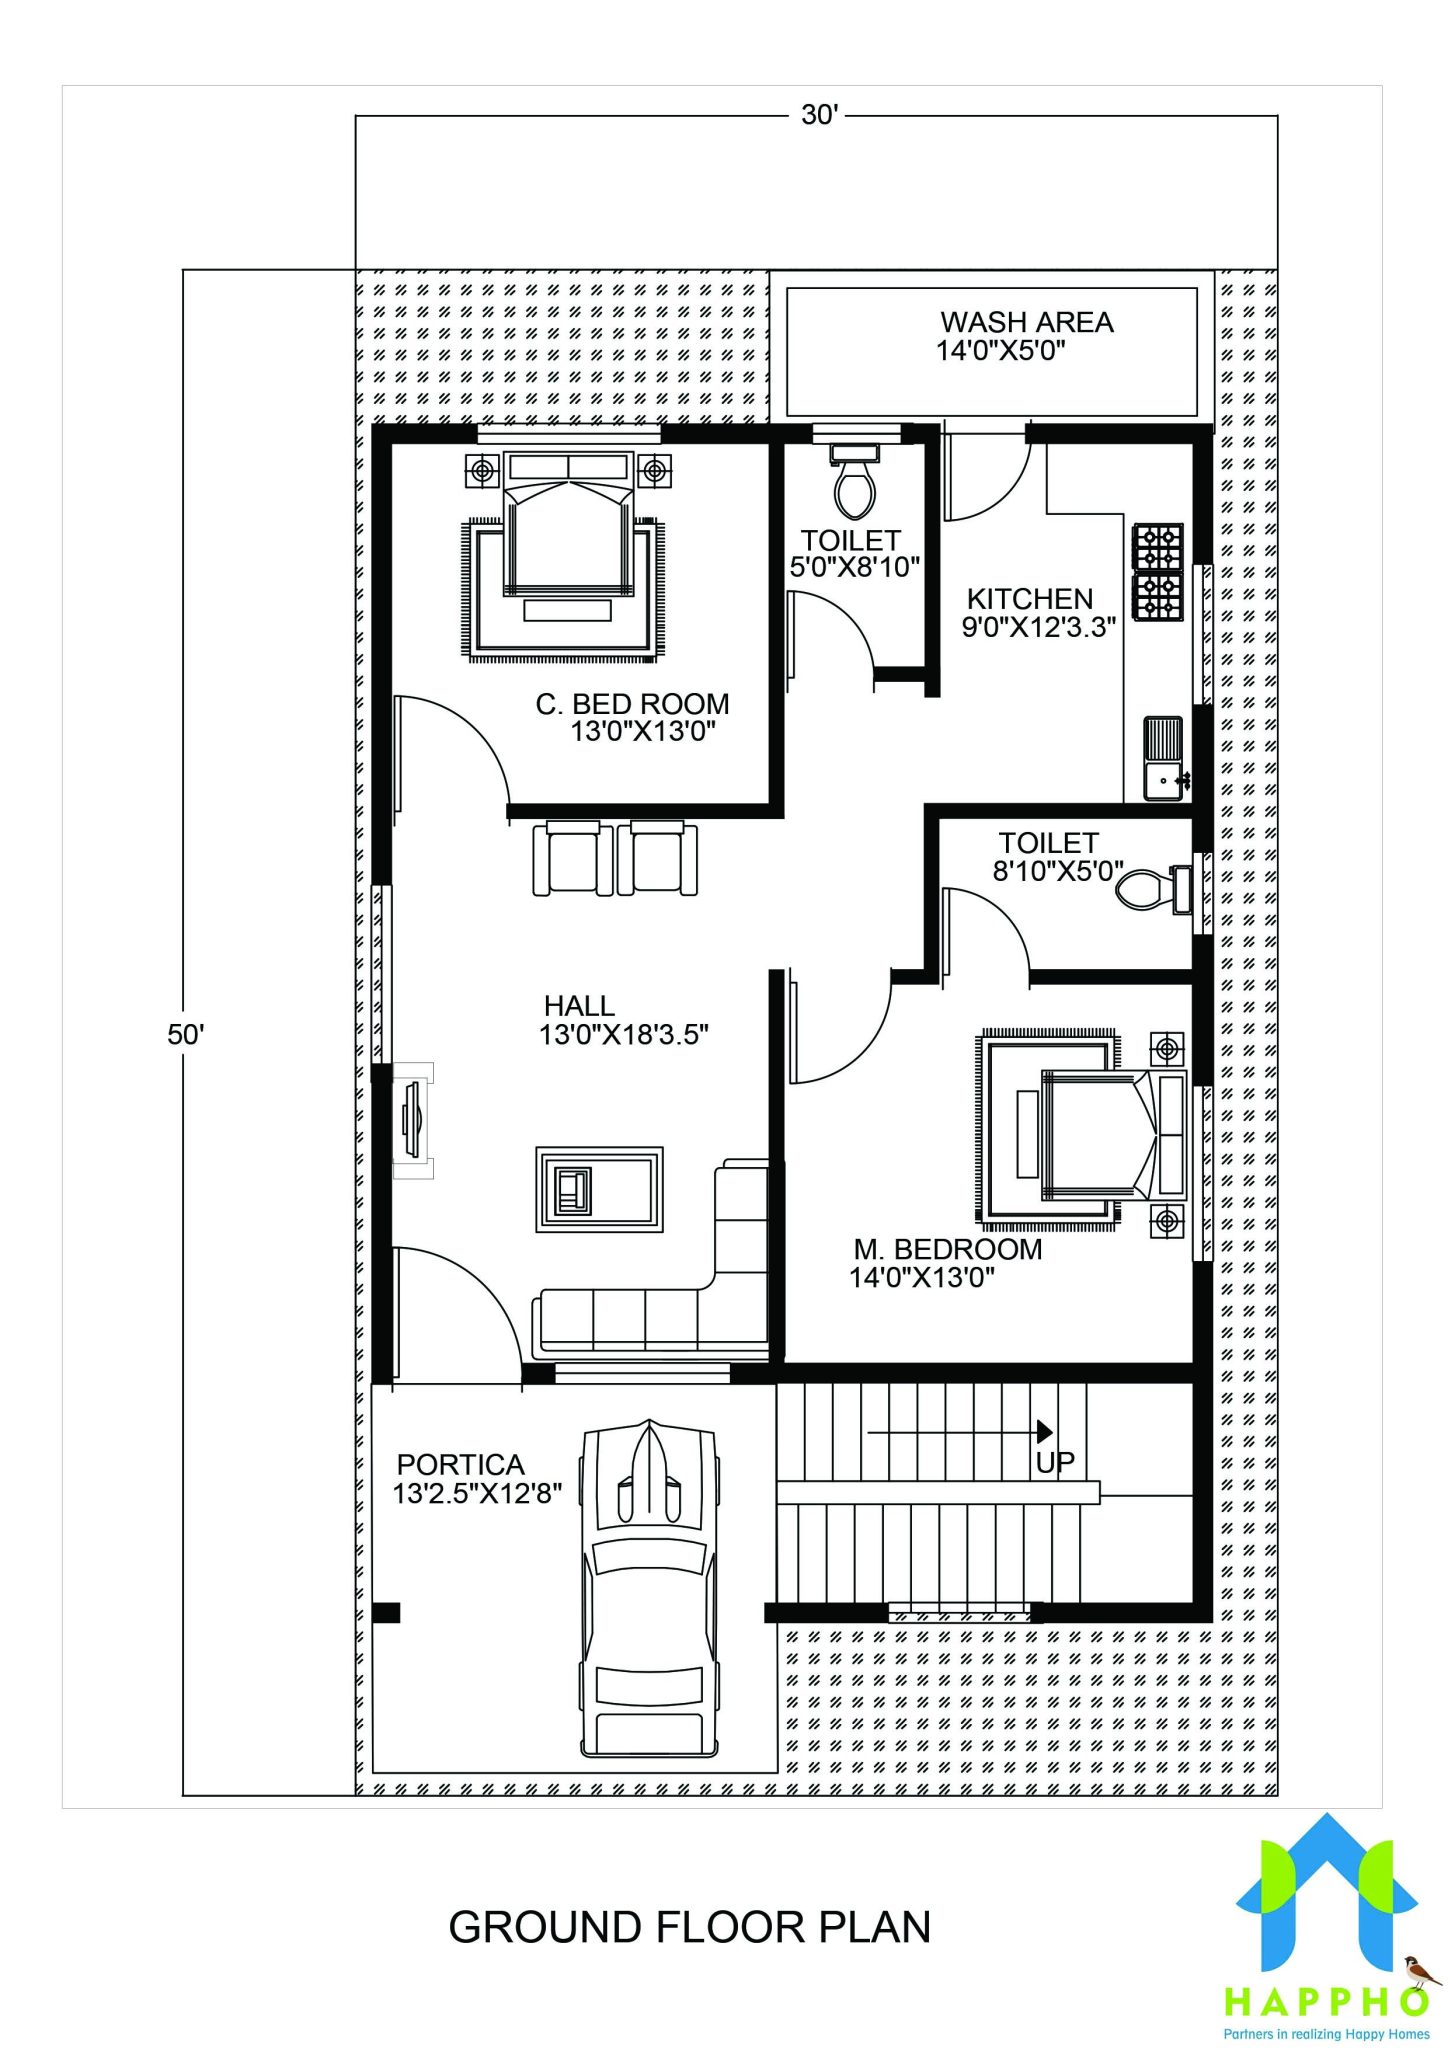 Floor Plan for 30 X 50 Feet plot | 2-BHK (1500 Square Feet/166 Square